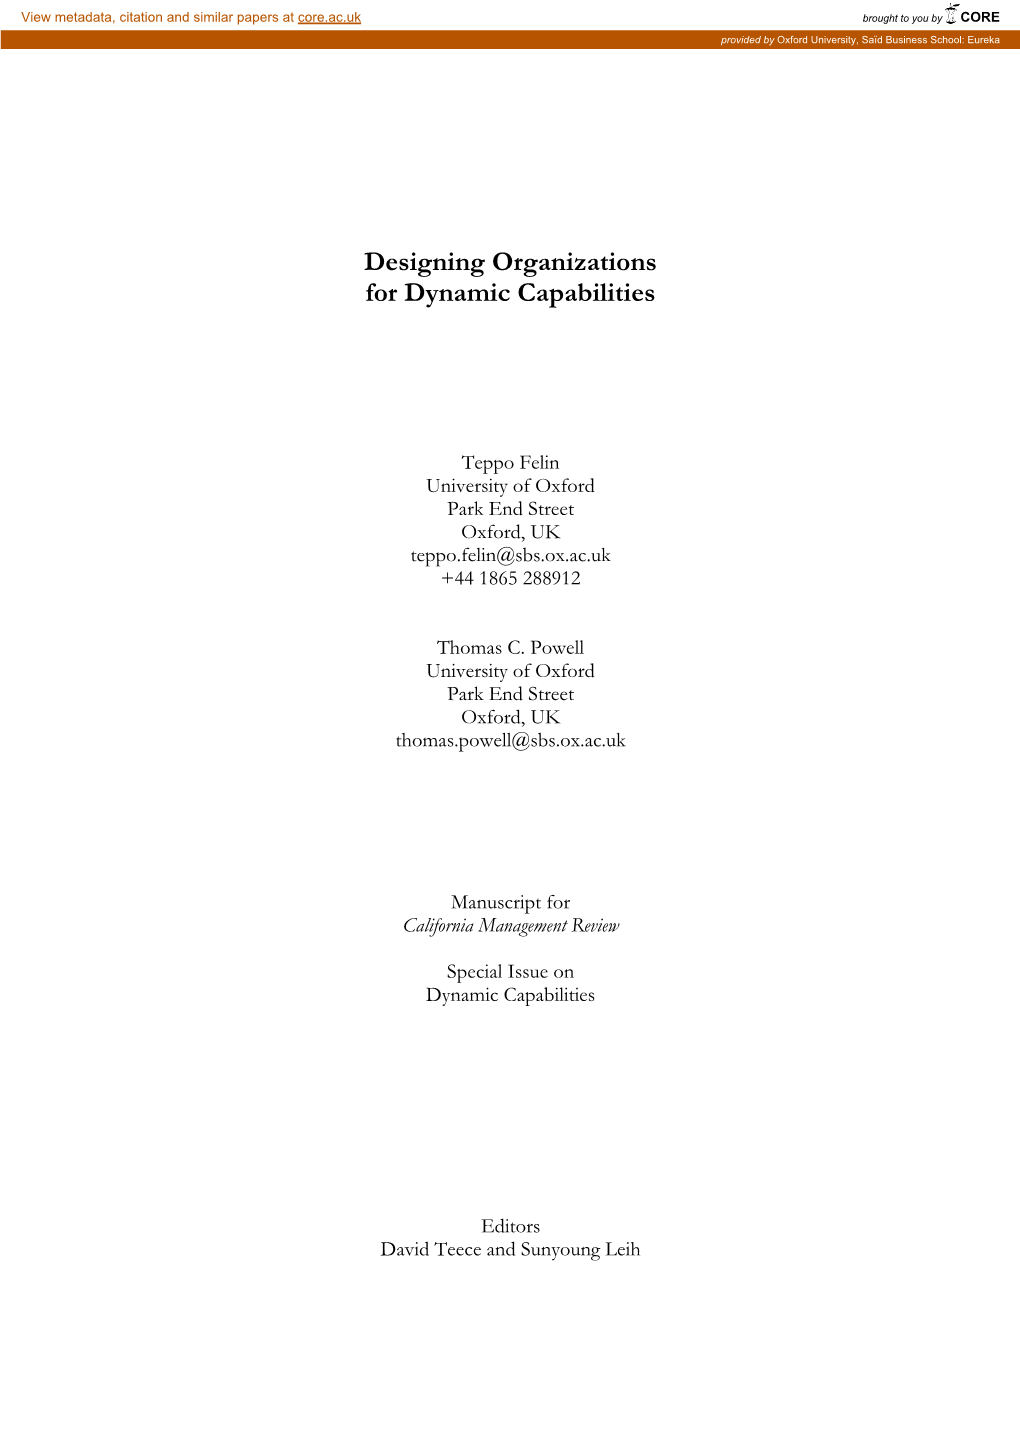 Designing Organizations for Dynamic Capabilities